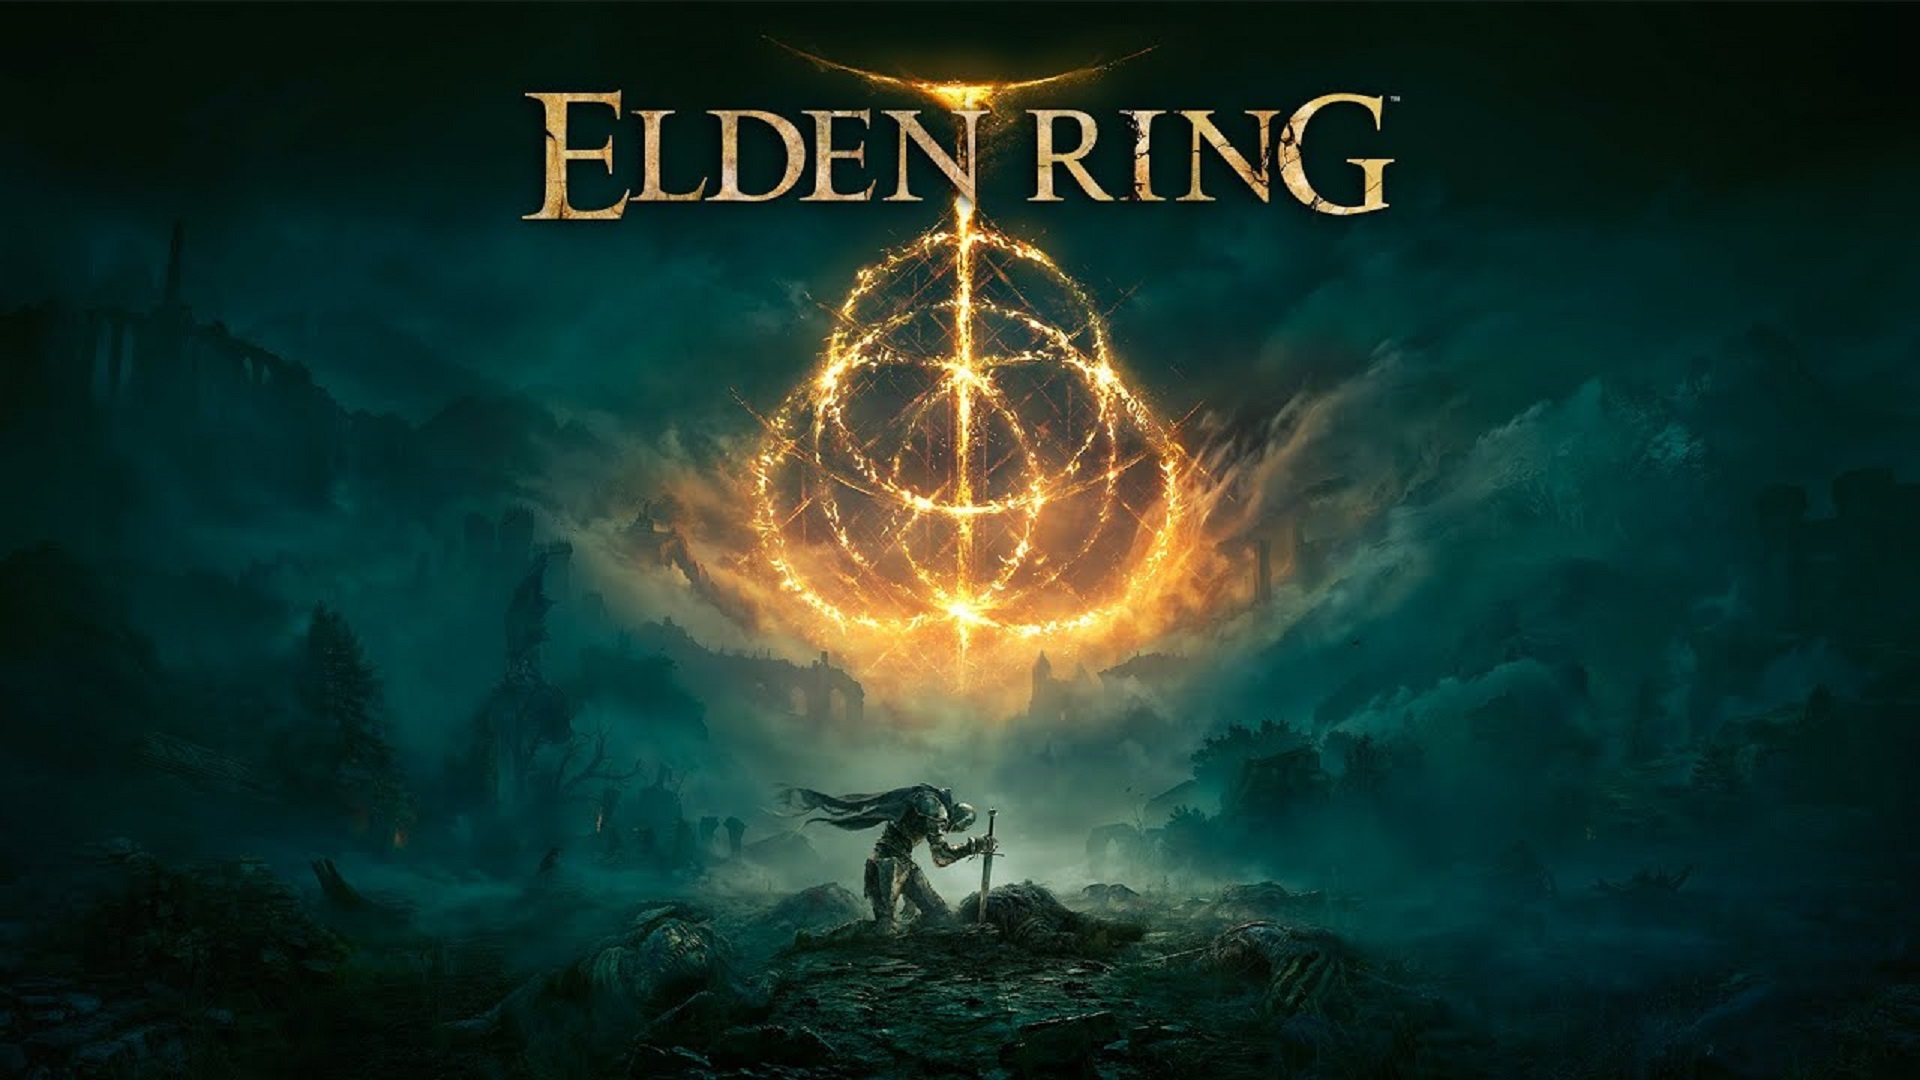 Elden Ring ทำยอดขายทะลุ 12 ล้านชุดทั่วโลก